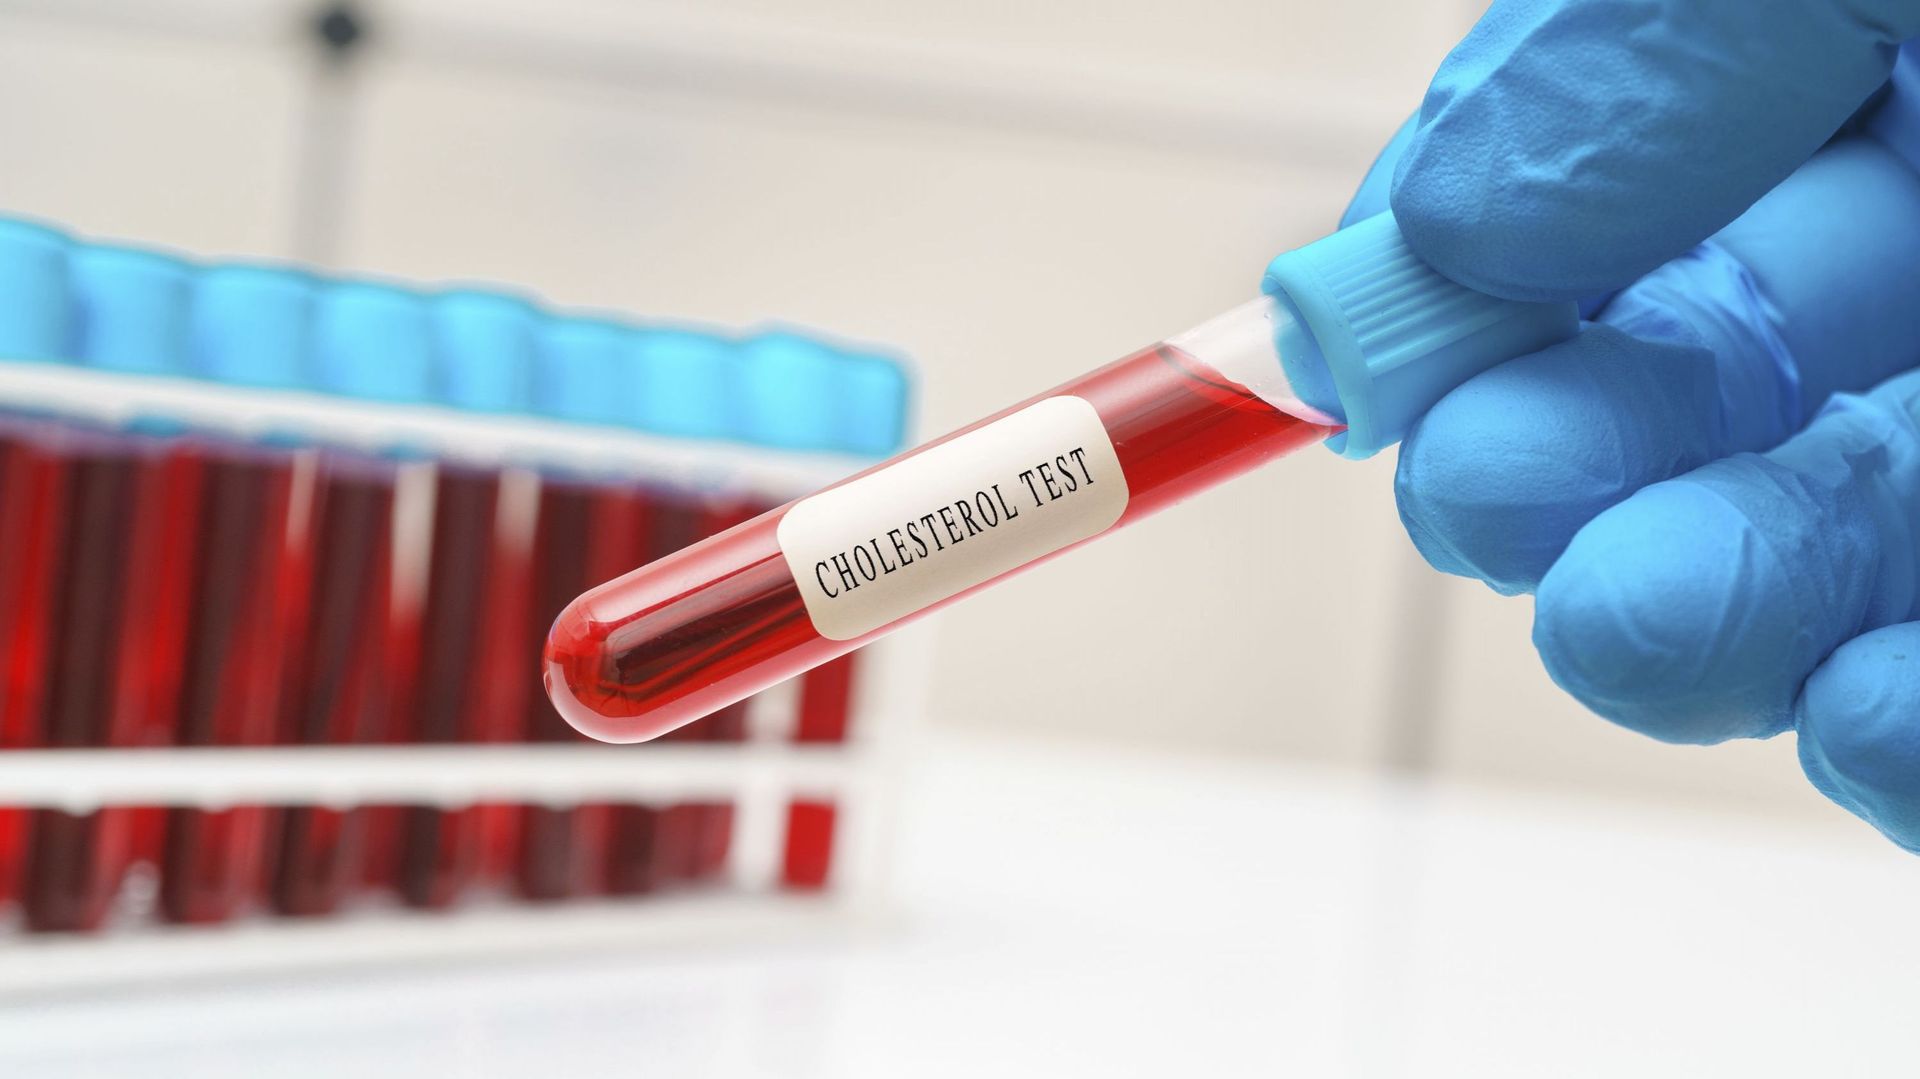 Cholesterol blood test, conceptual image